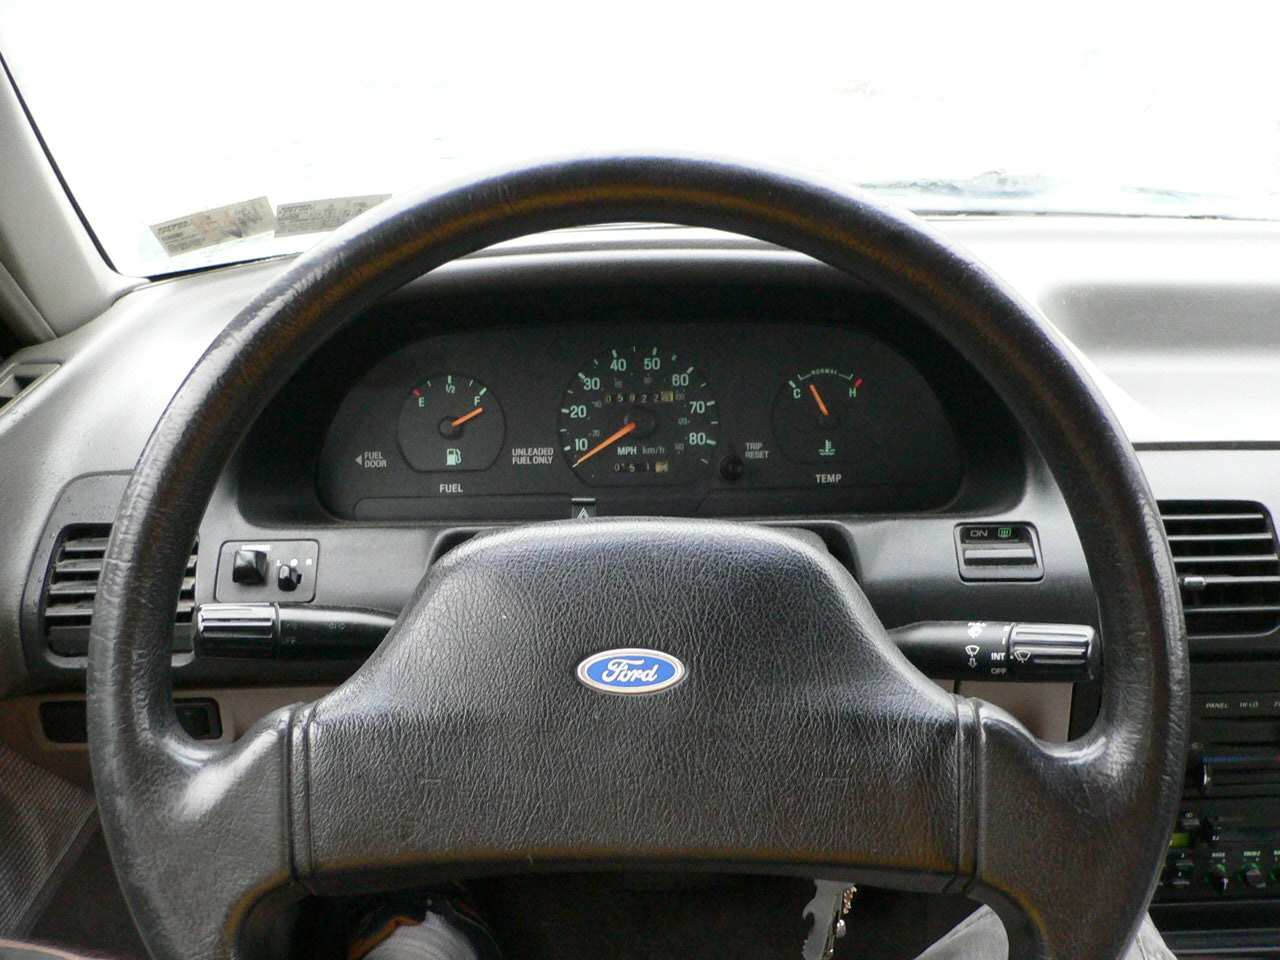 1991 Ford escort wagon specs